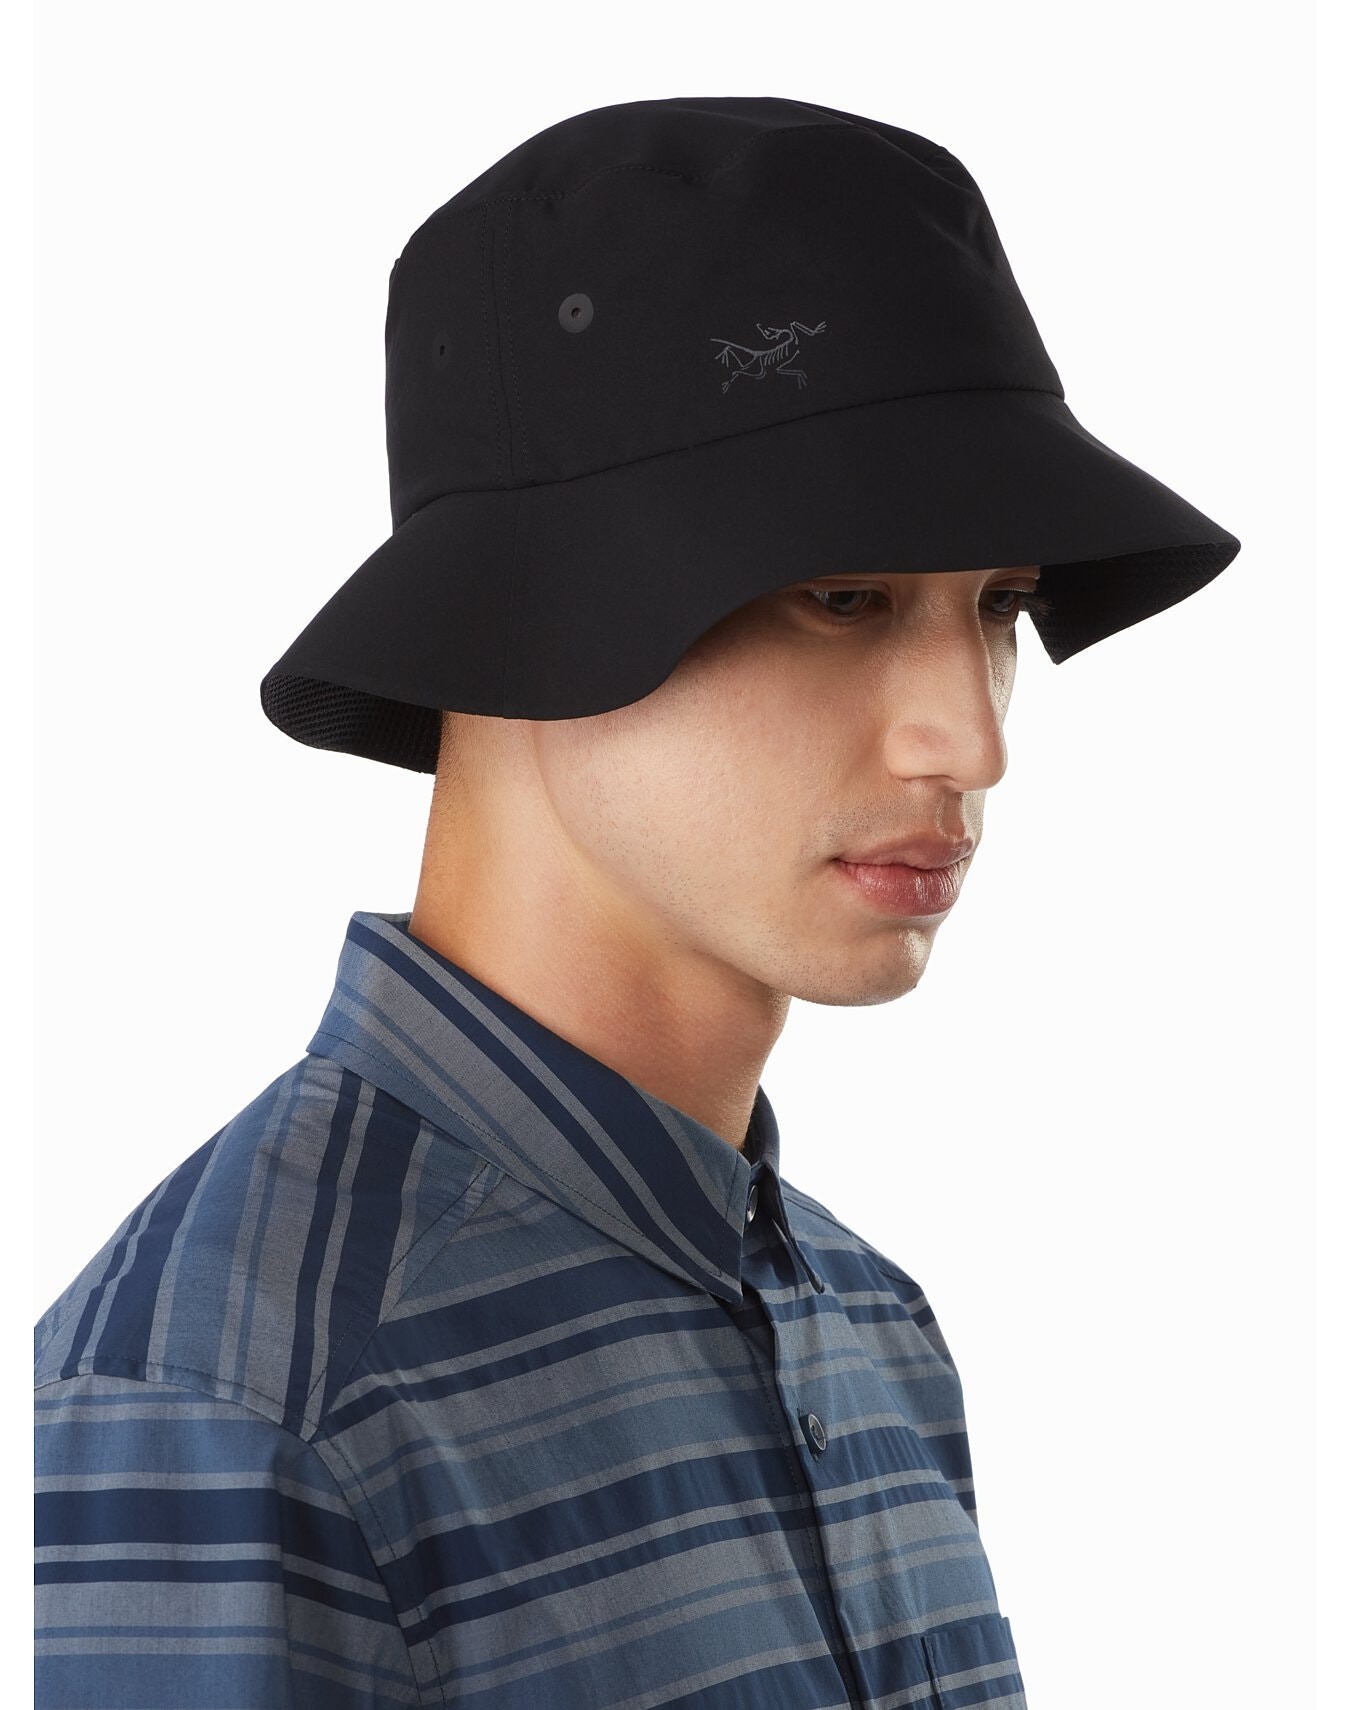 Sinsolo Bucket Hat Size L/XL Sun Cap Summer Black Travel Beach Outdoor Men UPF 50+ - 2